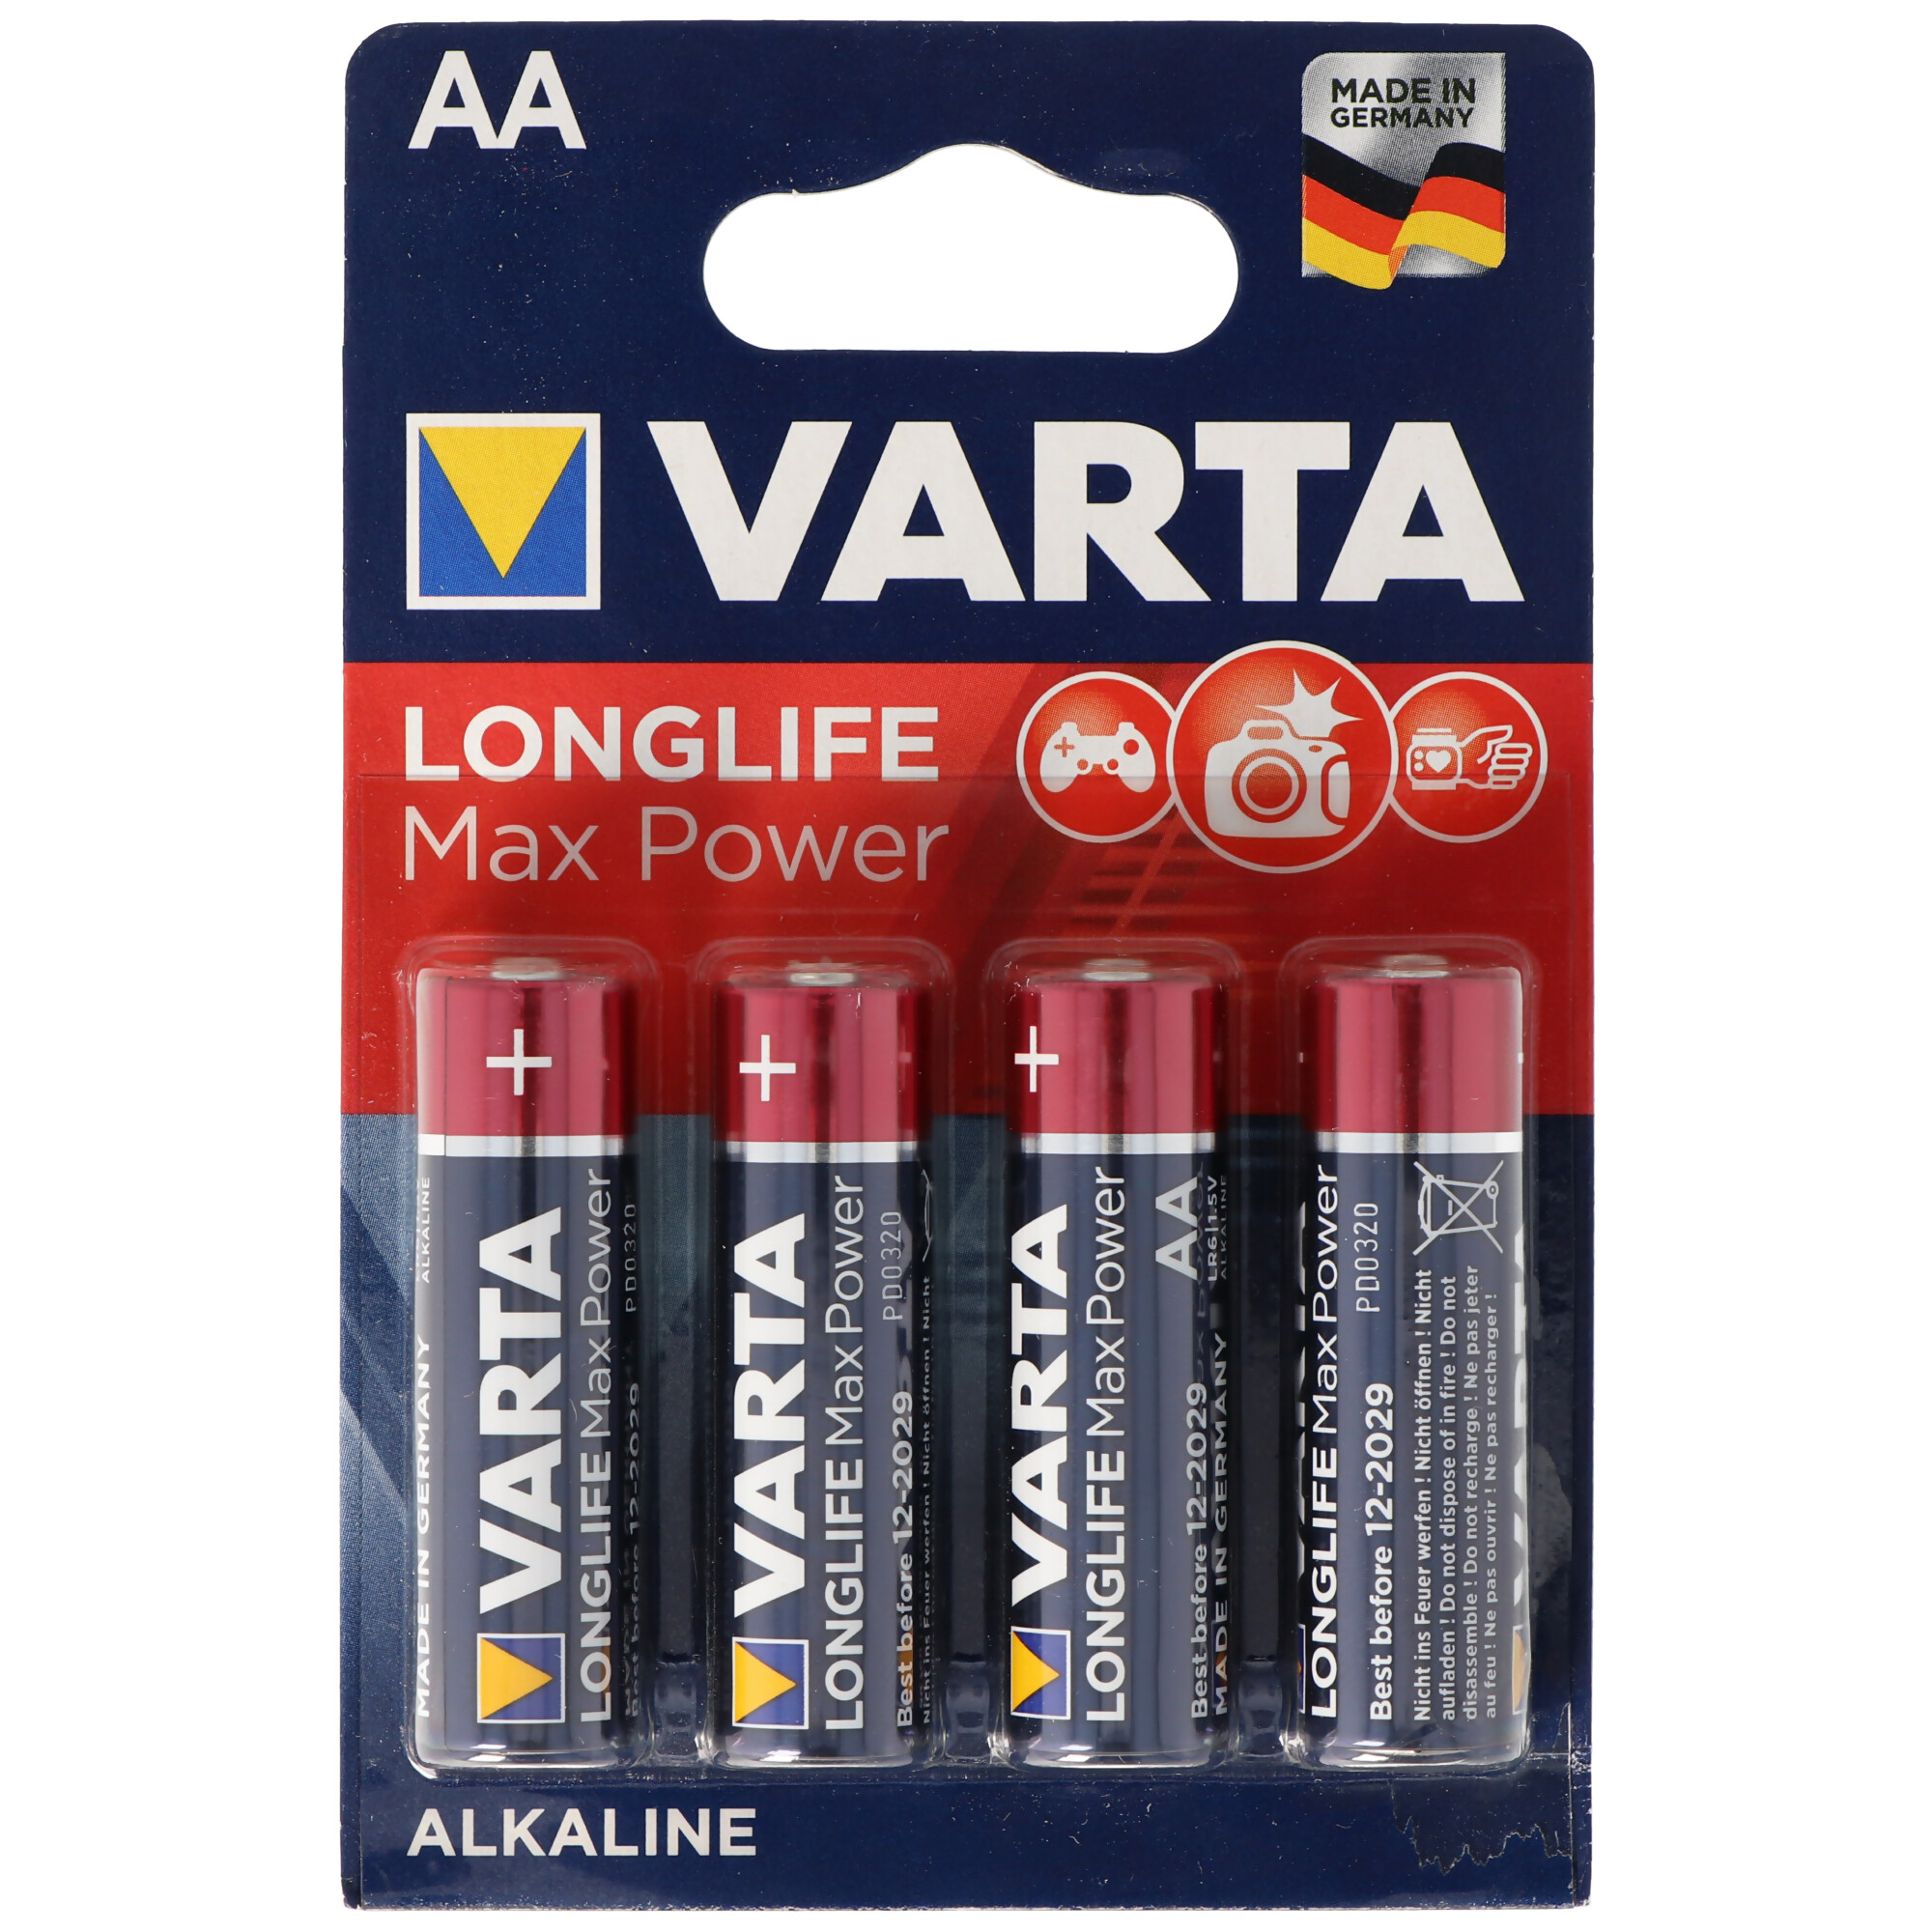 Varta Longlife Max Power (ehem. Max-Tech) 4706 Mignon AA Batterie 4-er Blister